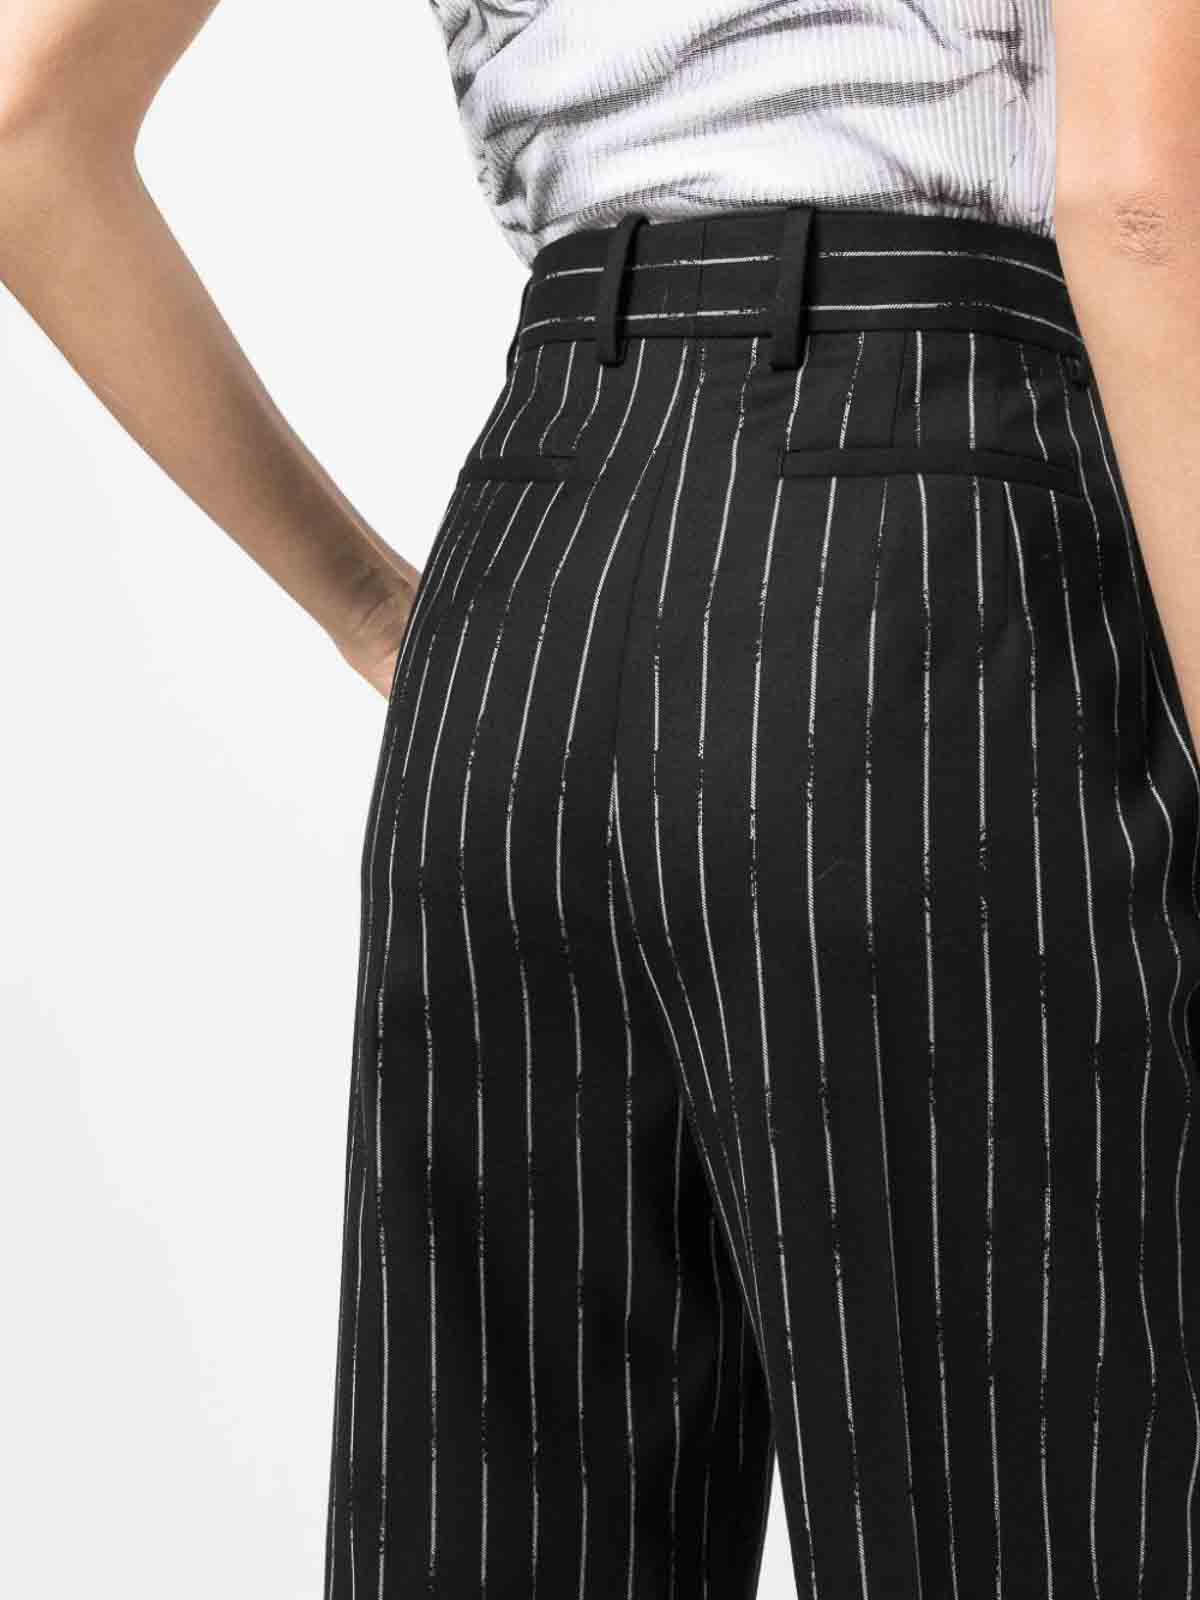 Amazon.com: Women Vintage Striped Slit Pants Elastic Bow High Waisted Wide  Leg Plus Size Flare Trousers Fashion Casual Sweatpants : Sports & Outdoors